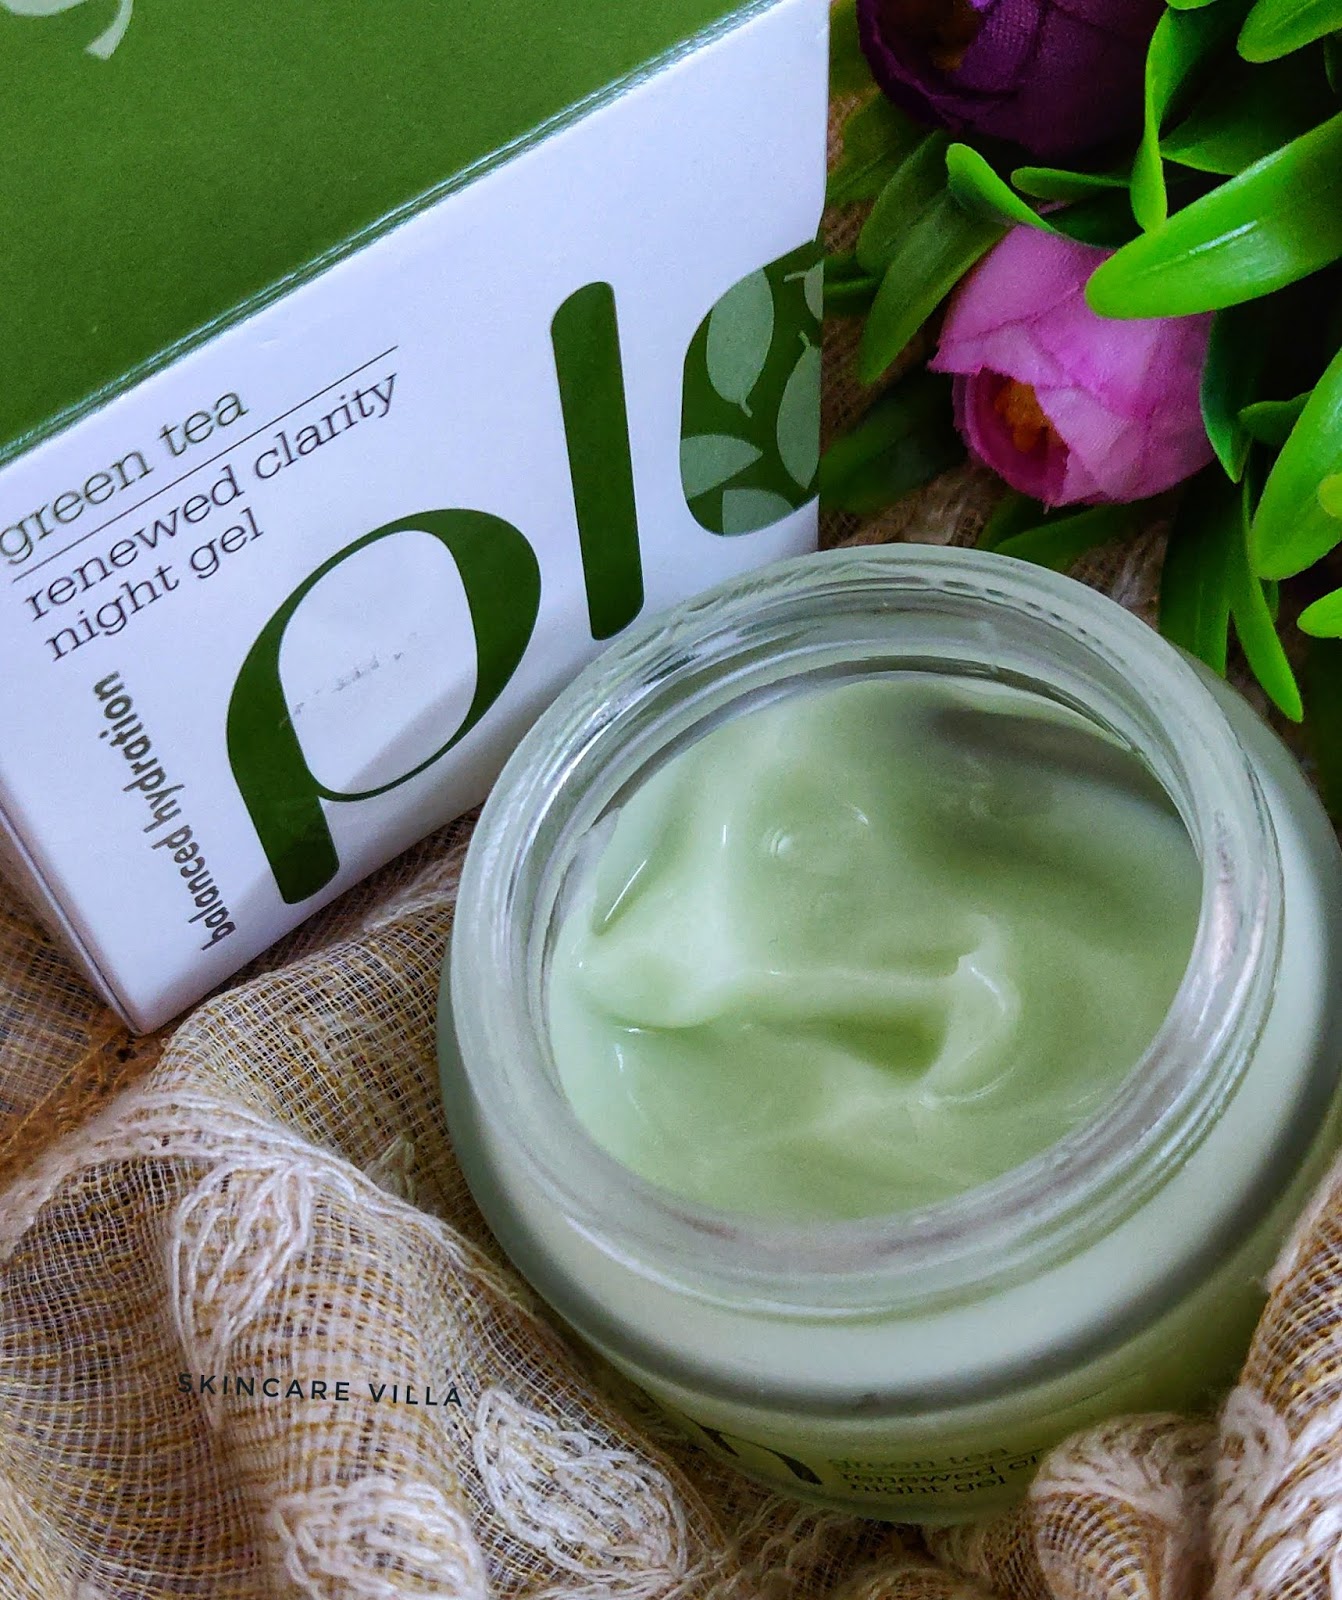 Plum Green Tea Renewed Clarity Night Gel Review - Skincare Villa